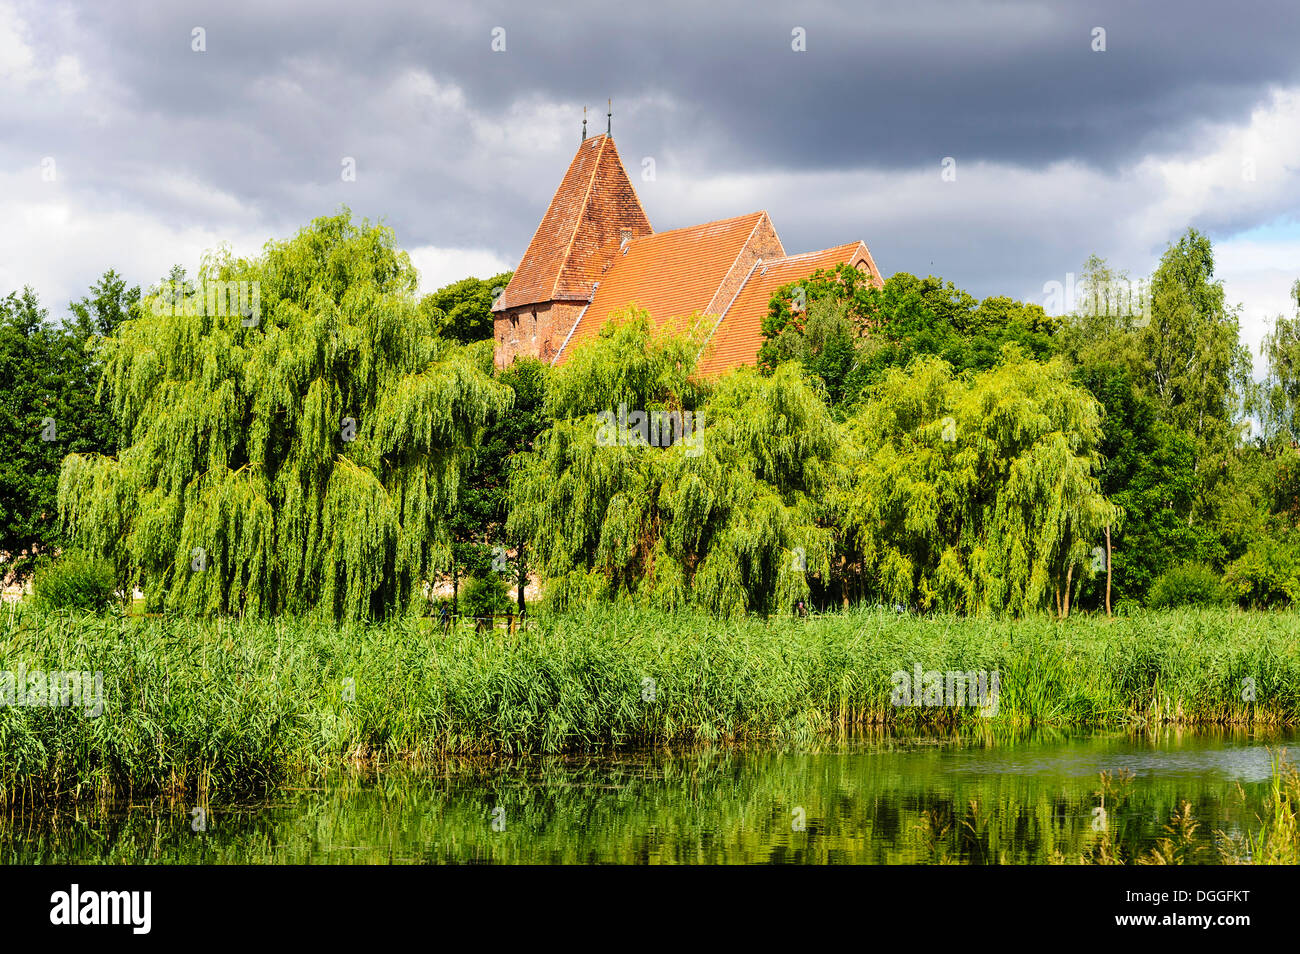 Ex monastero benedettino in Rehna sulle rive del fiume Radegast, Rehna, Meclemburgo-Pomerania, Germania Foto Stock